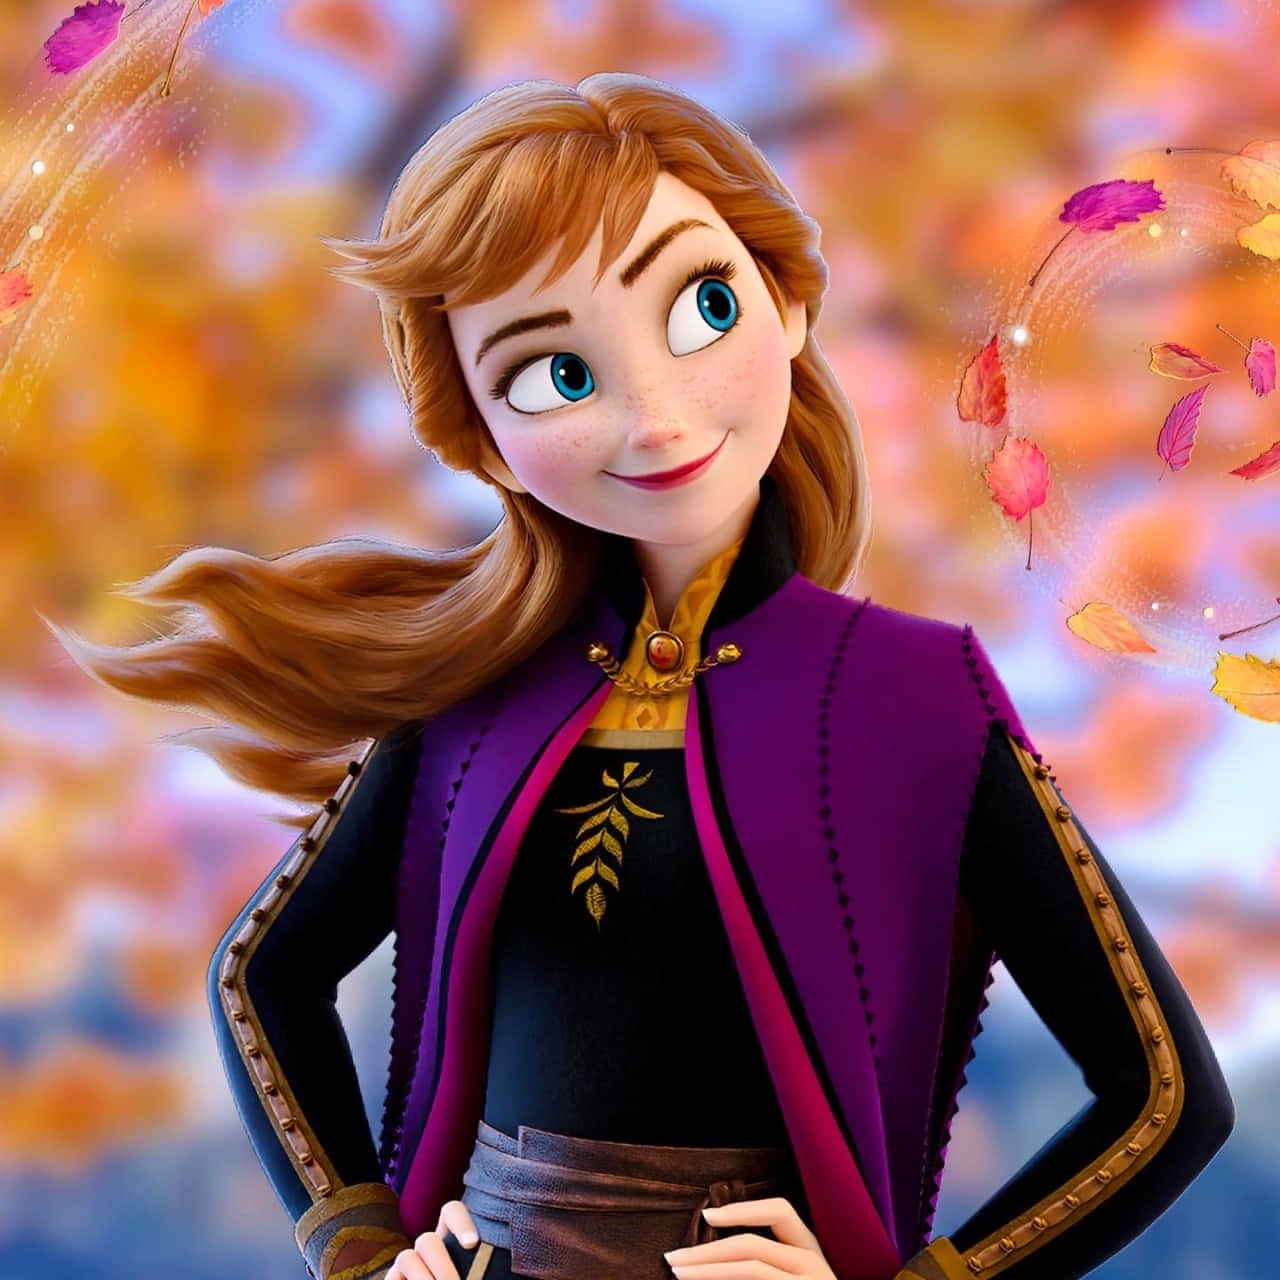 16 Facts About Princess Anna (Frozen) - Facts.net